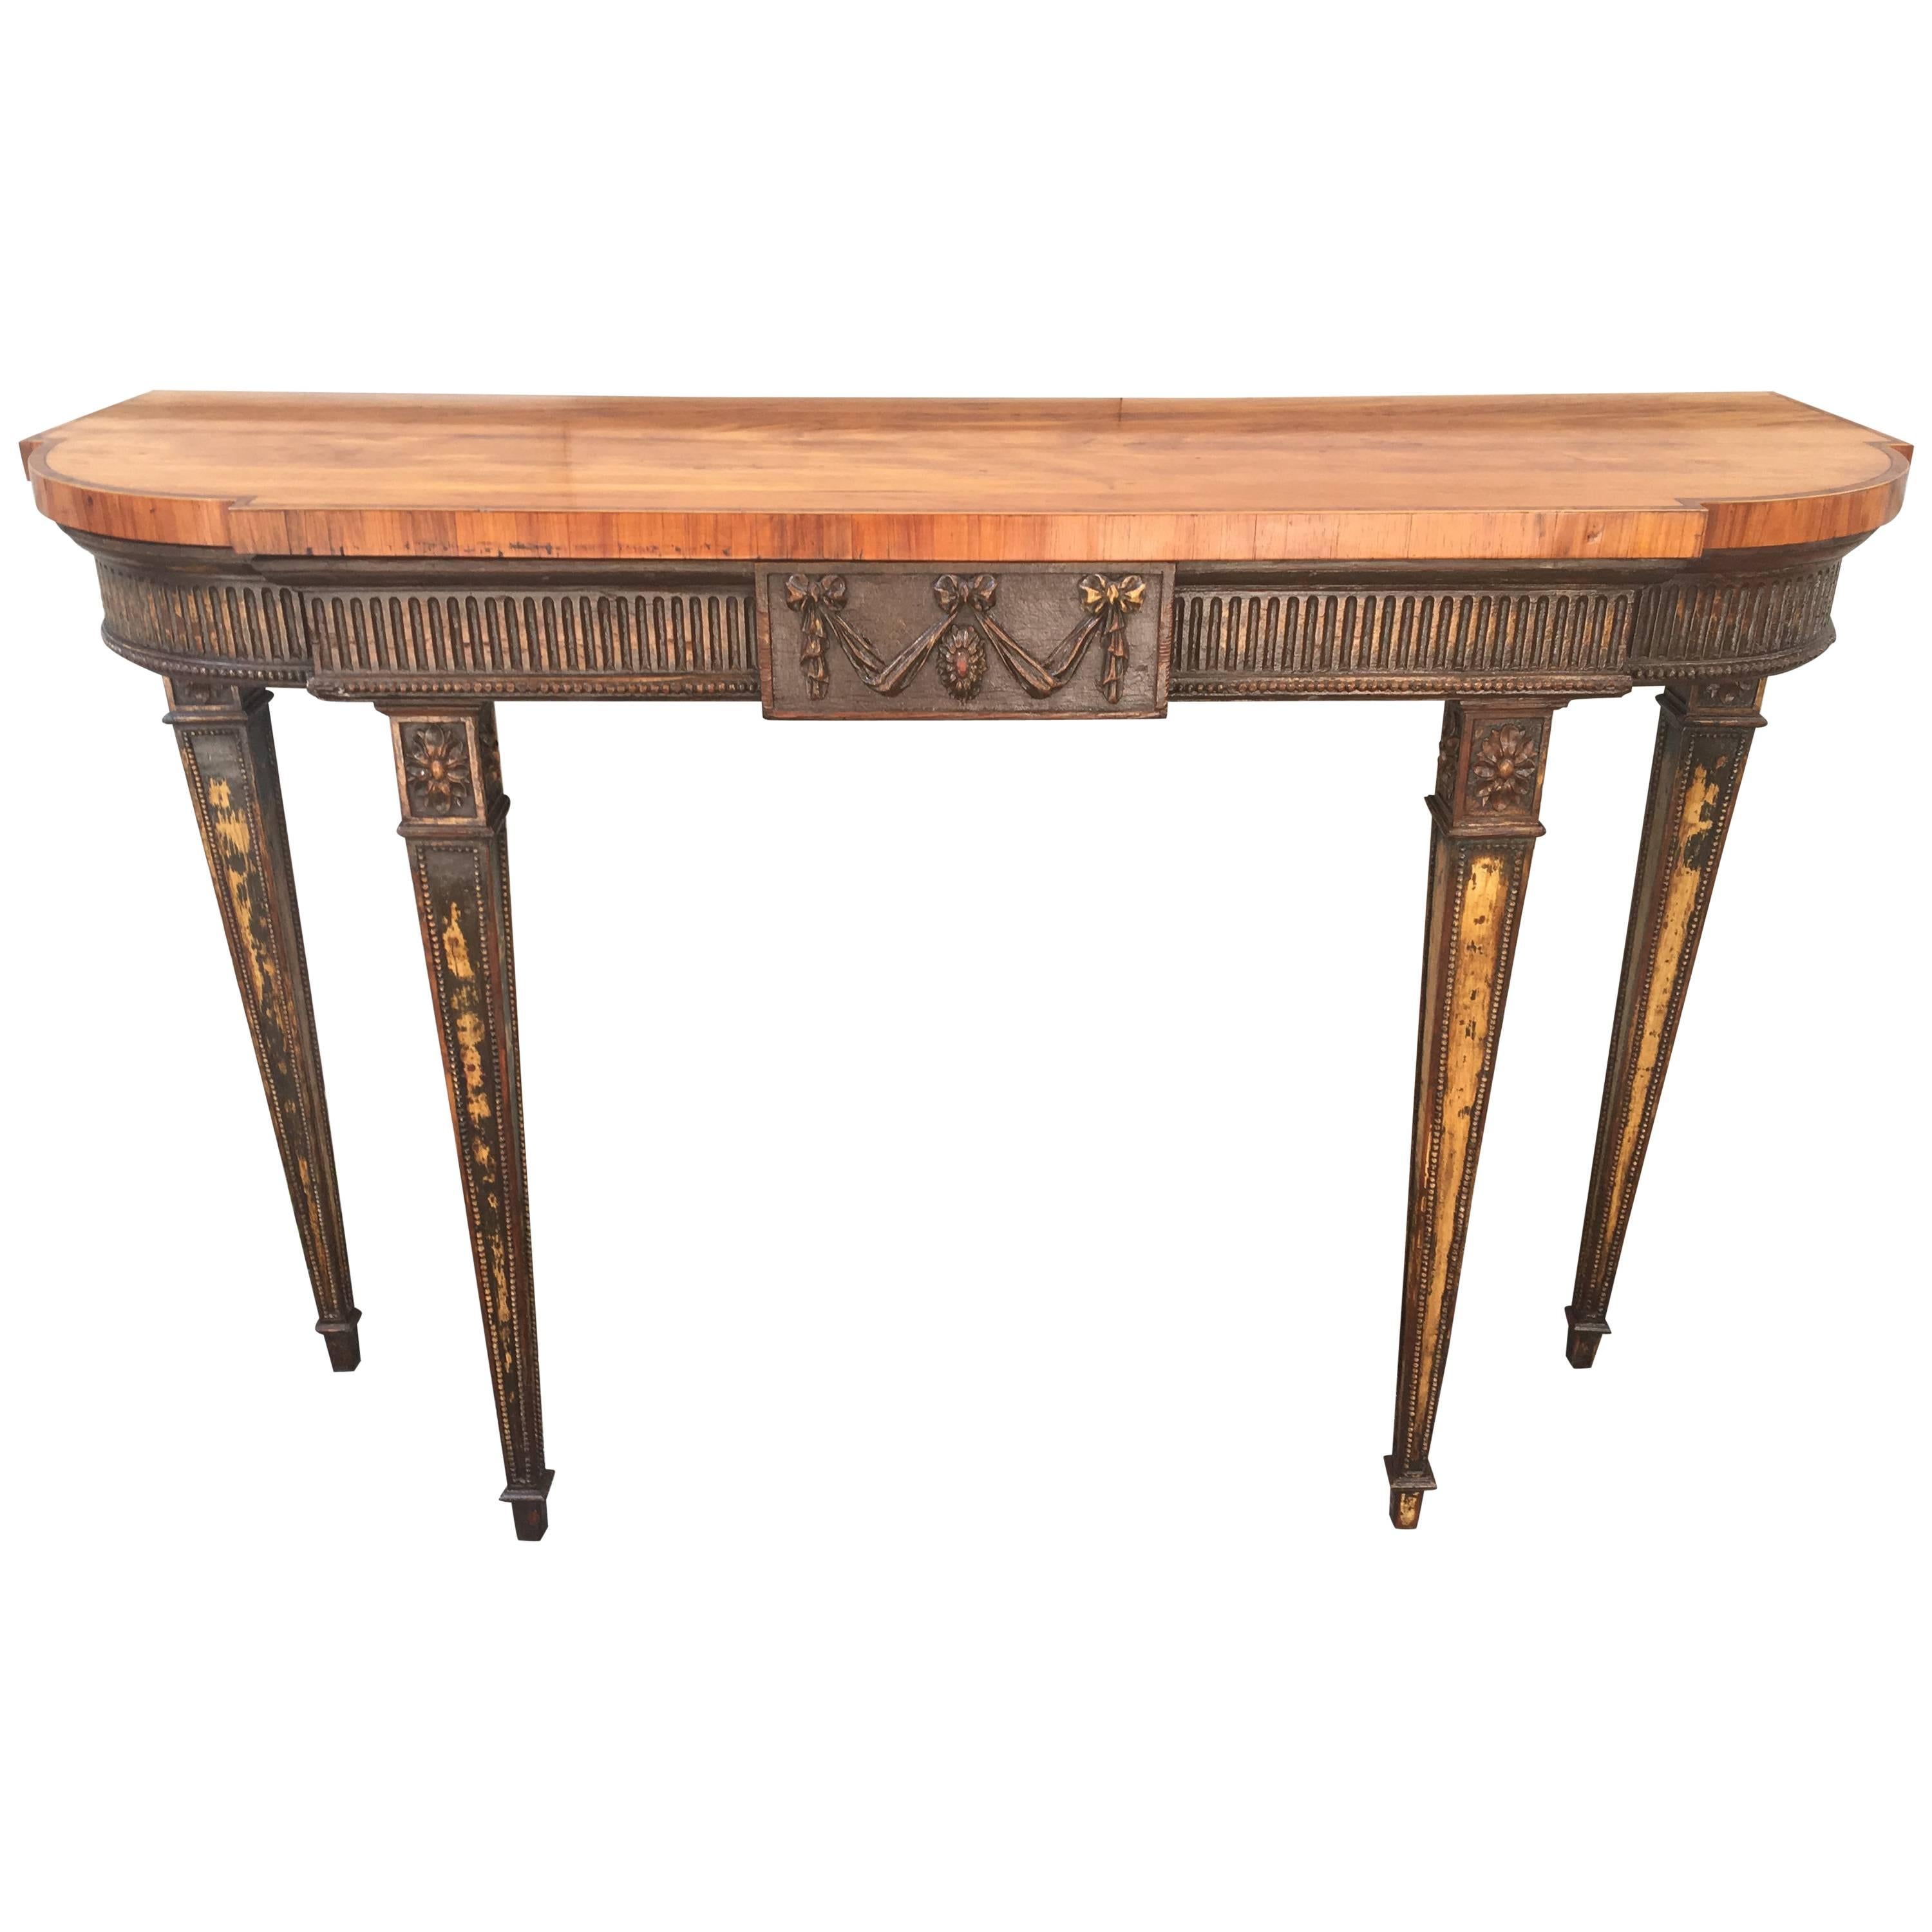 18th Century Adams Console Table